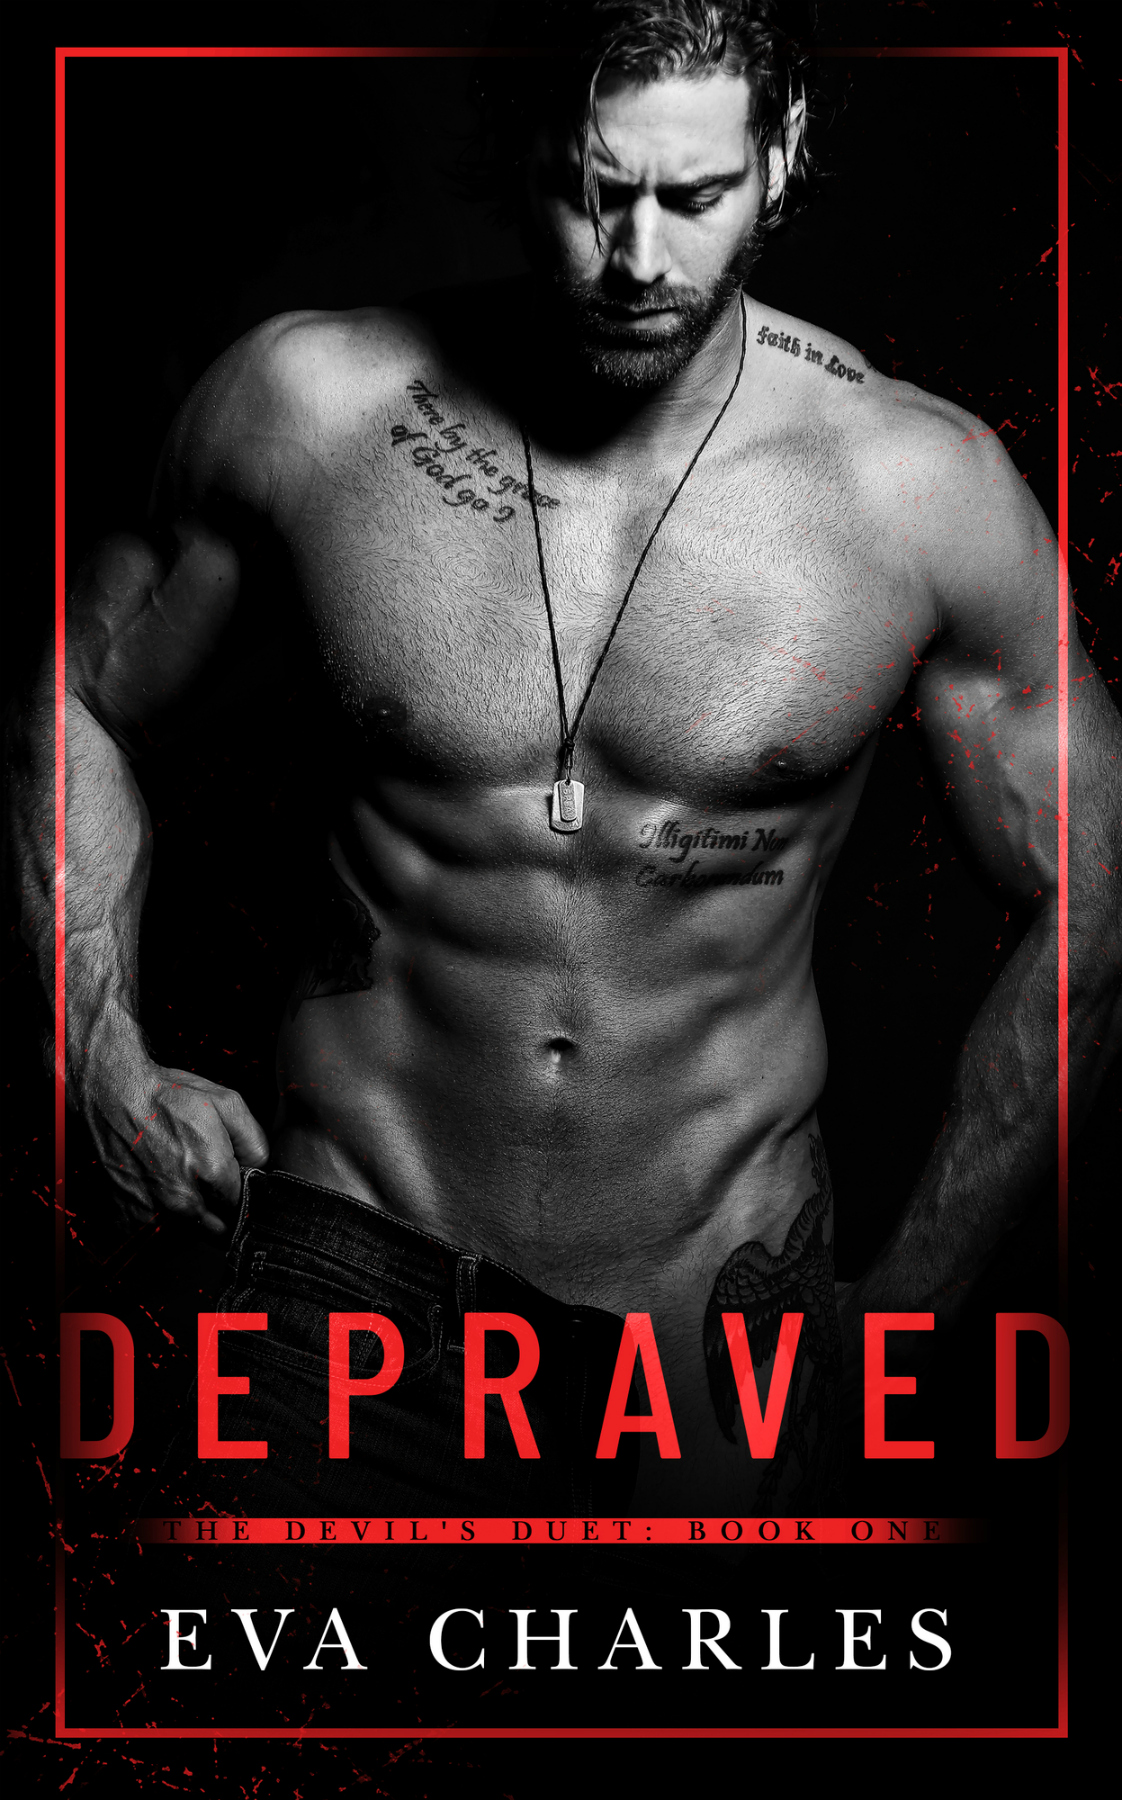 Depraved & Delivered: The Devils Duet by Eva Charles [Cover Reveal]